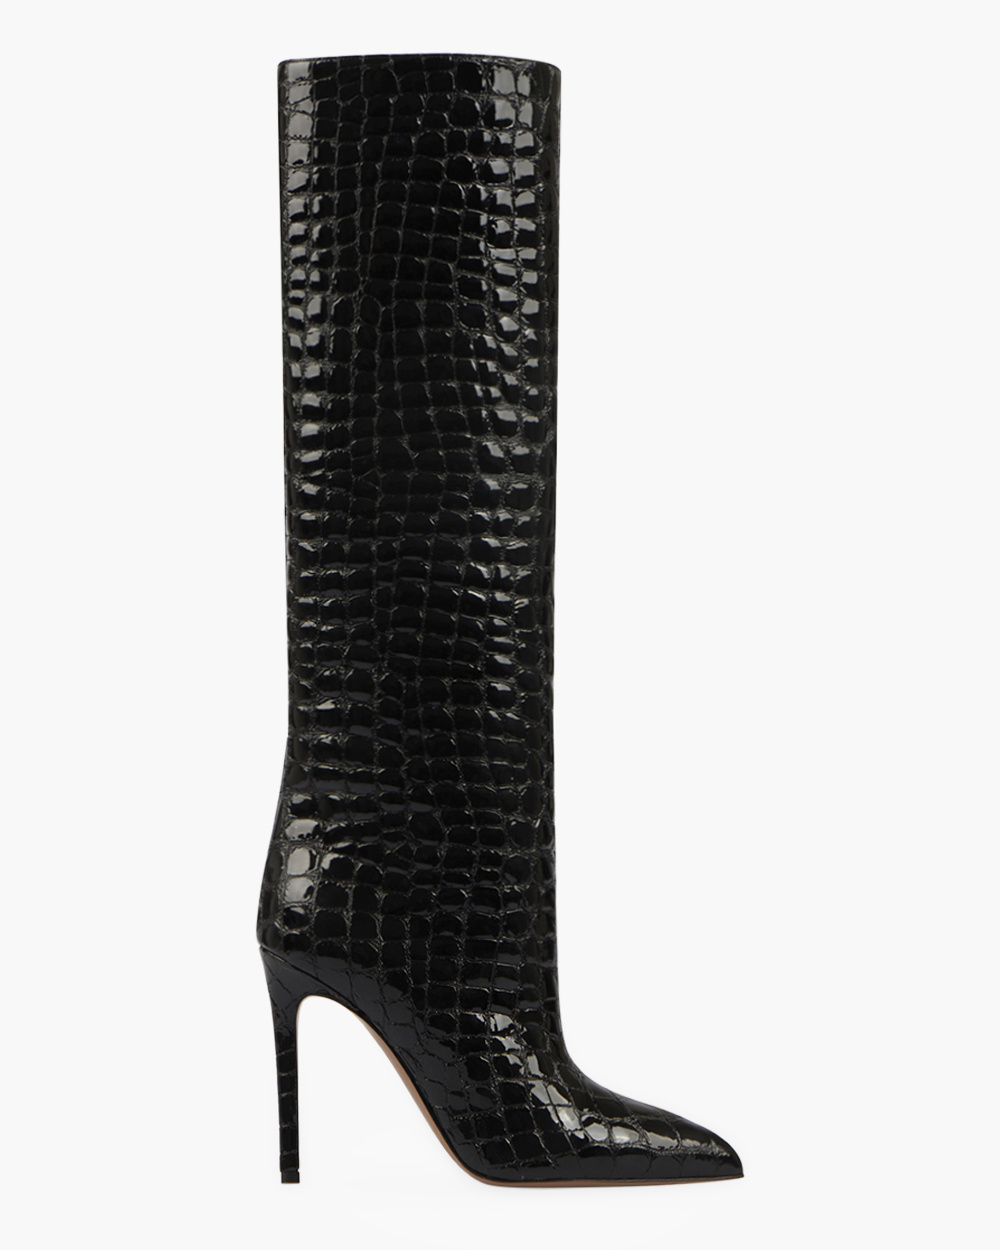 Stiletto boot in BLACK glossy croc-effect